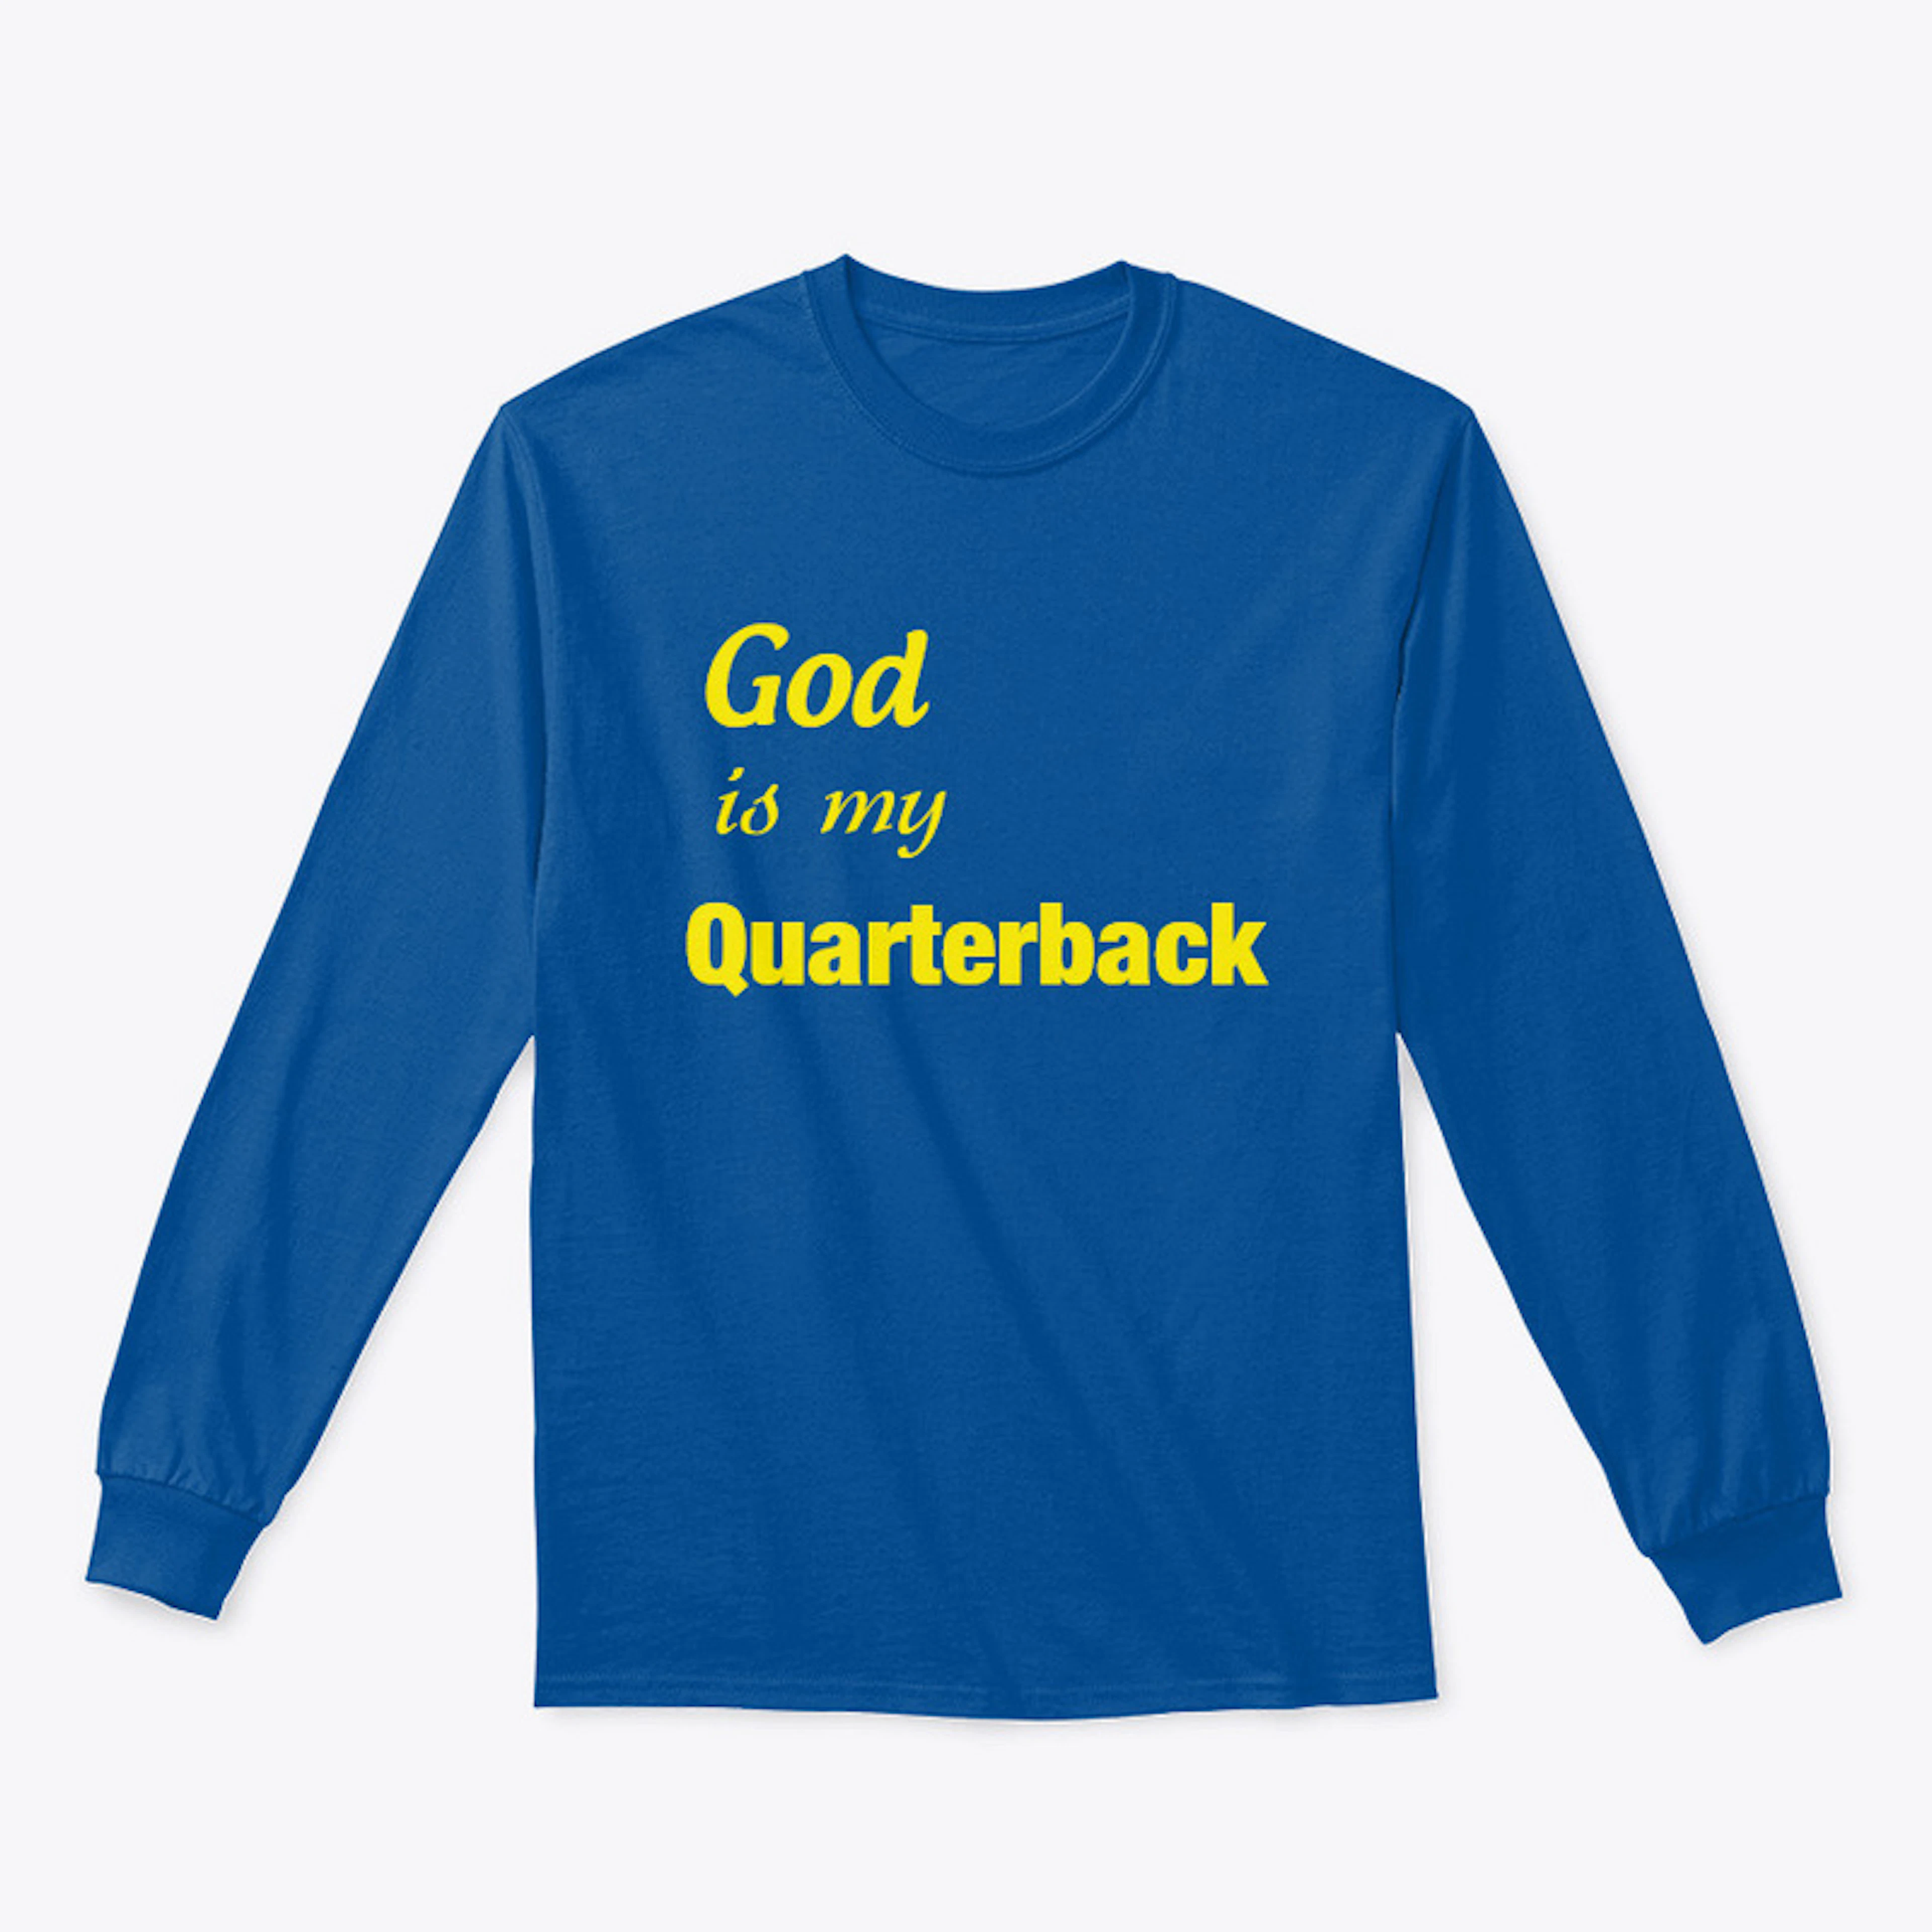 God is my Quarterback